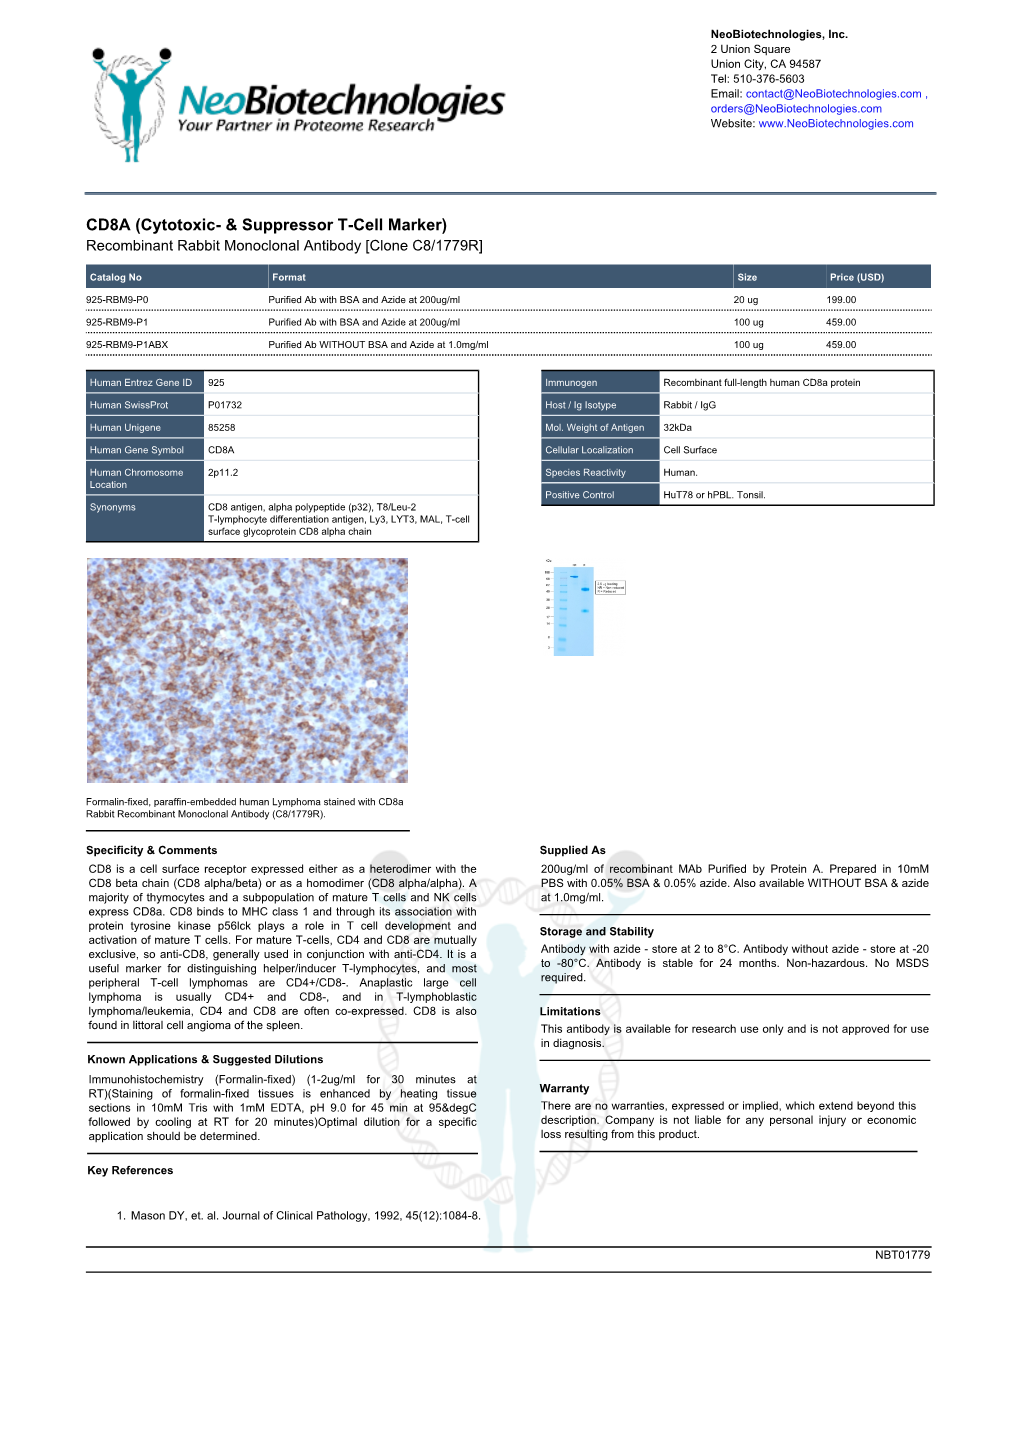 CD8A (Cytotoxic- & Suppressor T-Cell Marker)